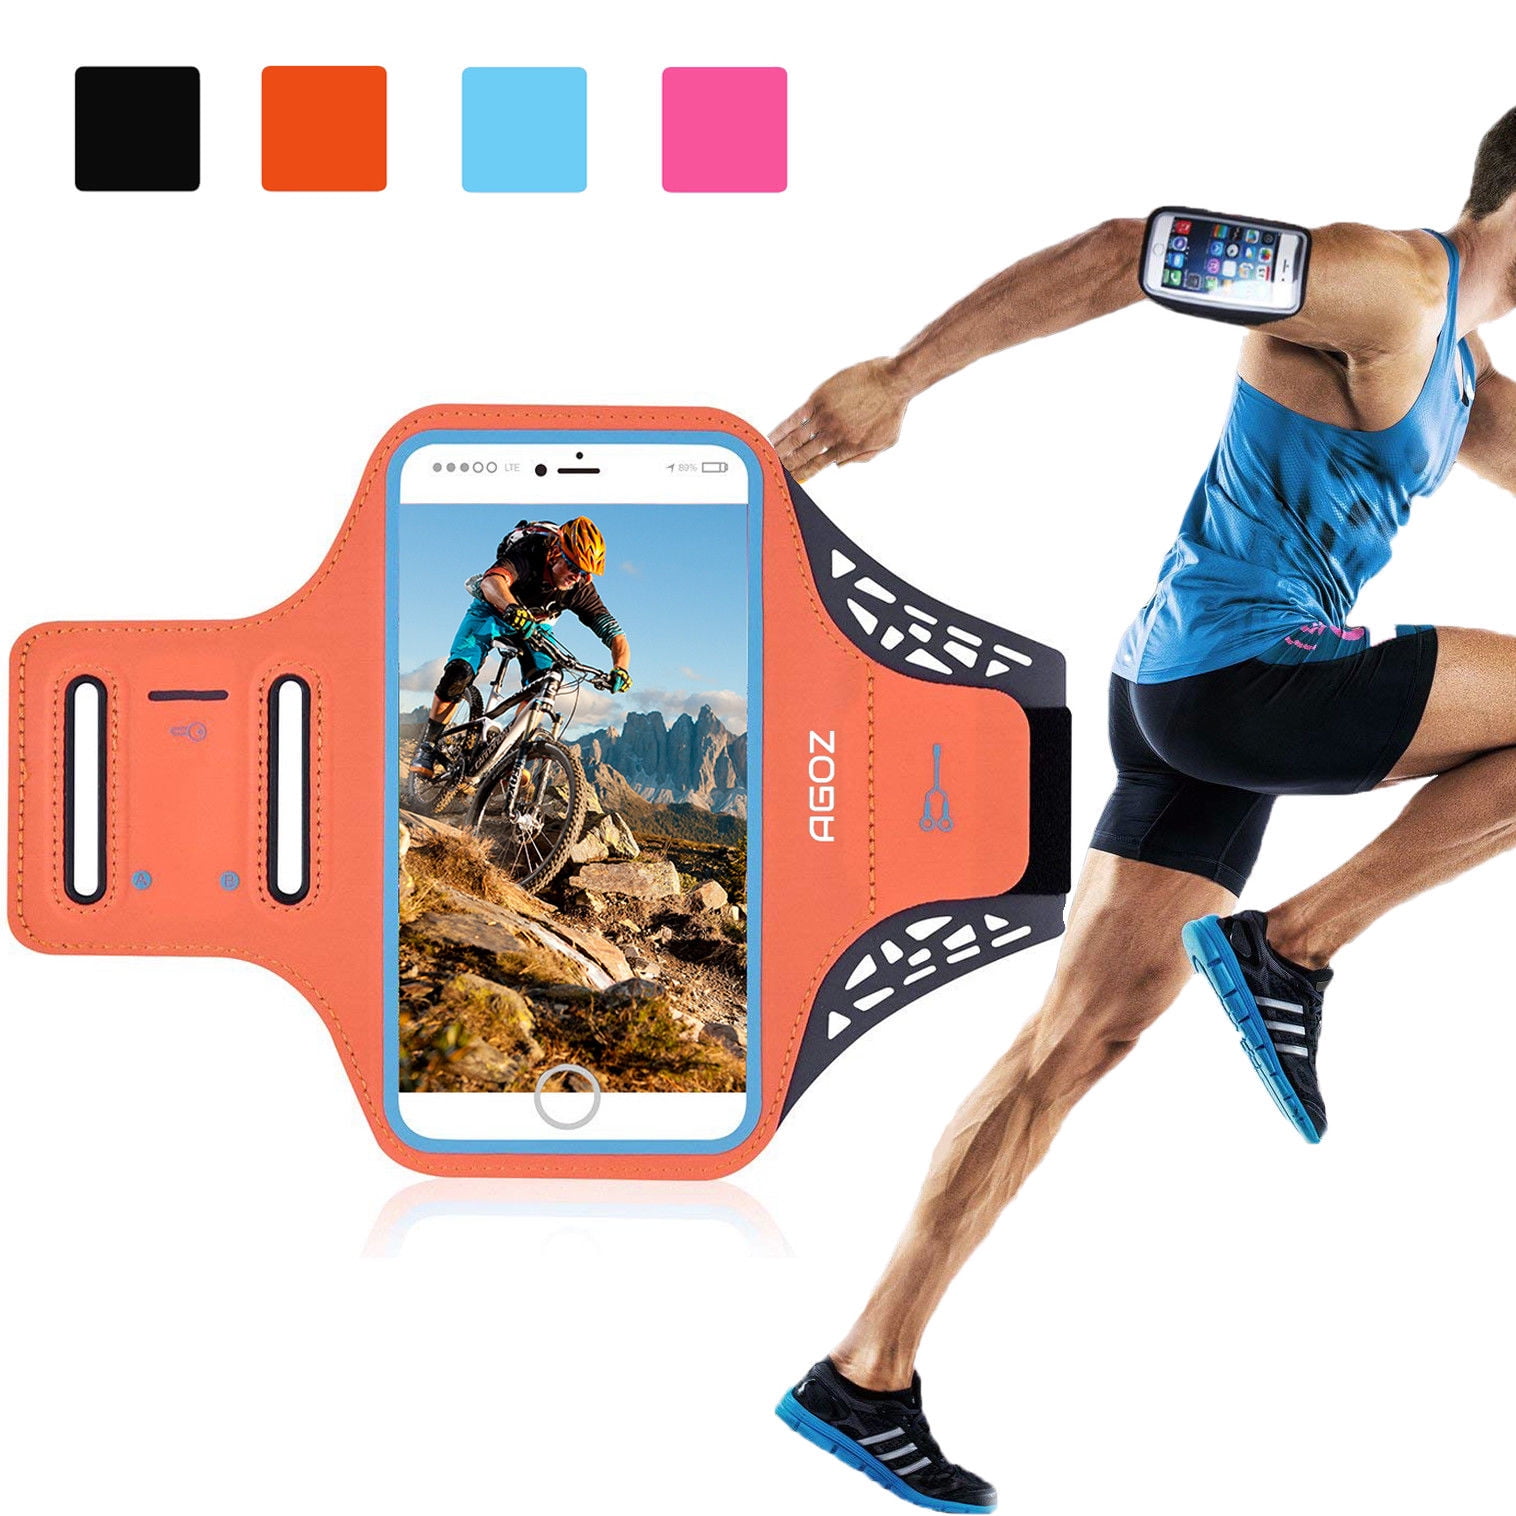 Samsung Galaxy J3 2016 Sports Running Jogging Gym Armband Case Cover Holder 